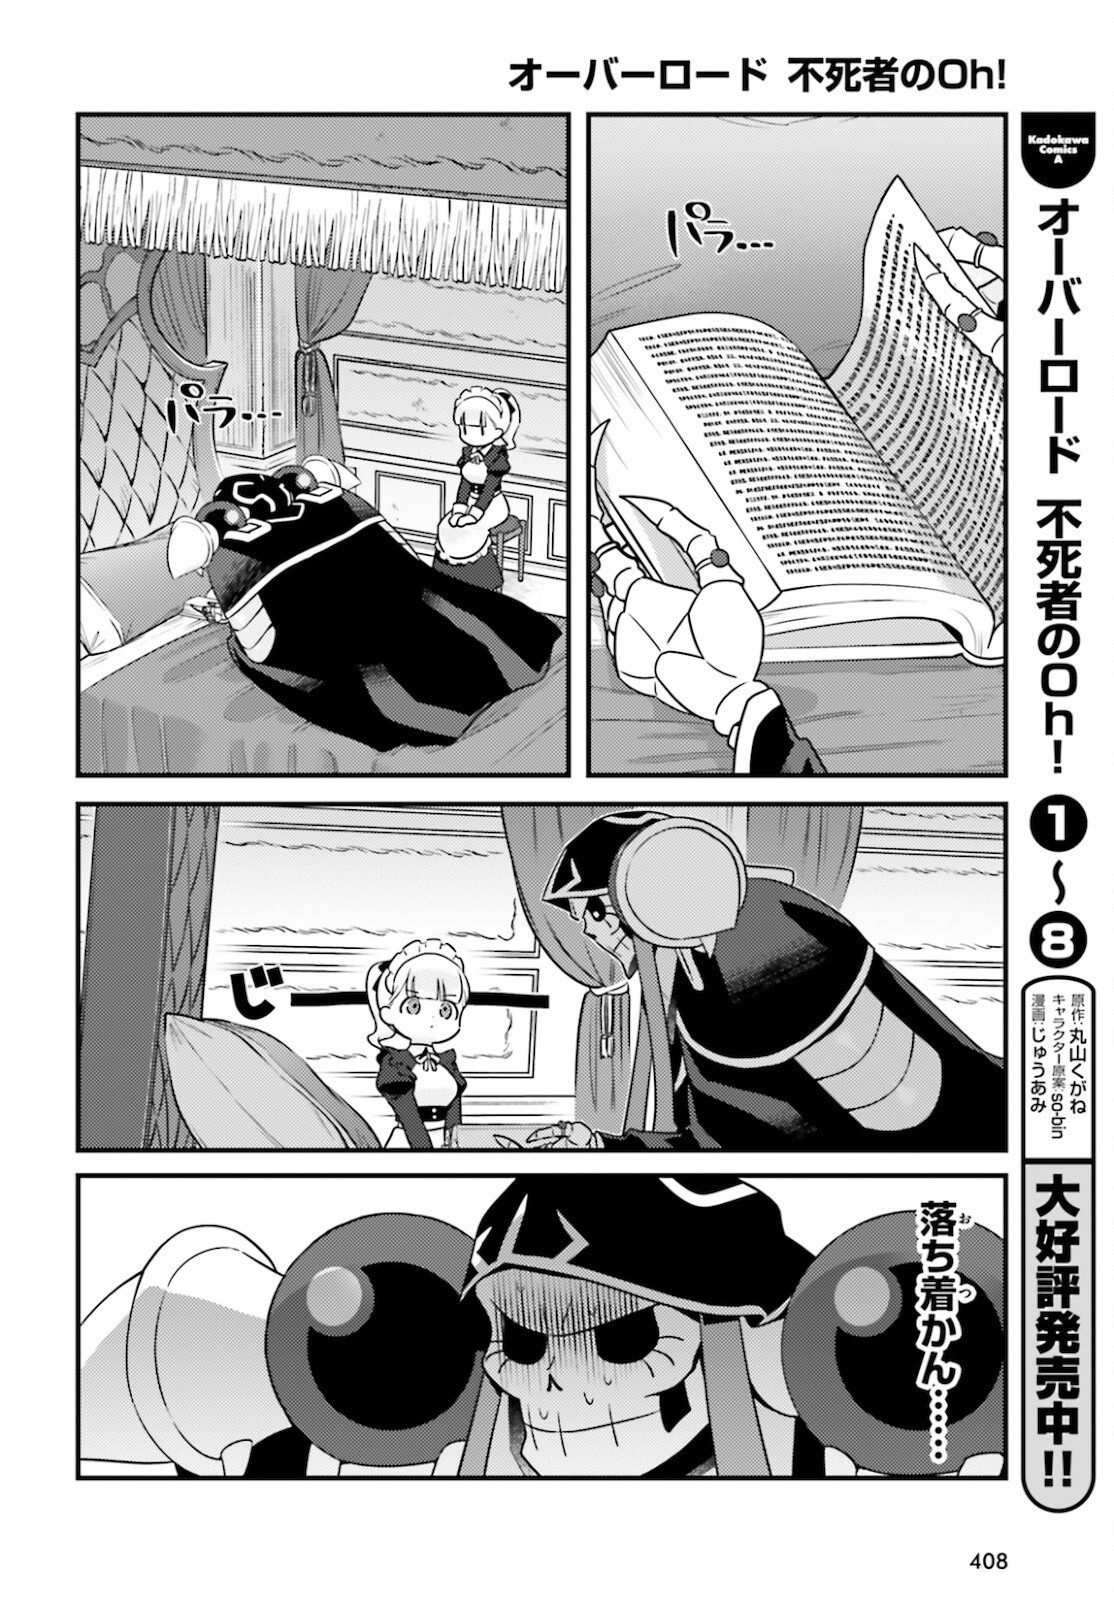 Overlord-Fushisha-no-Oh - Chapter 53 - Page 2